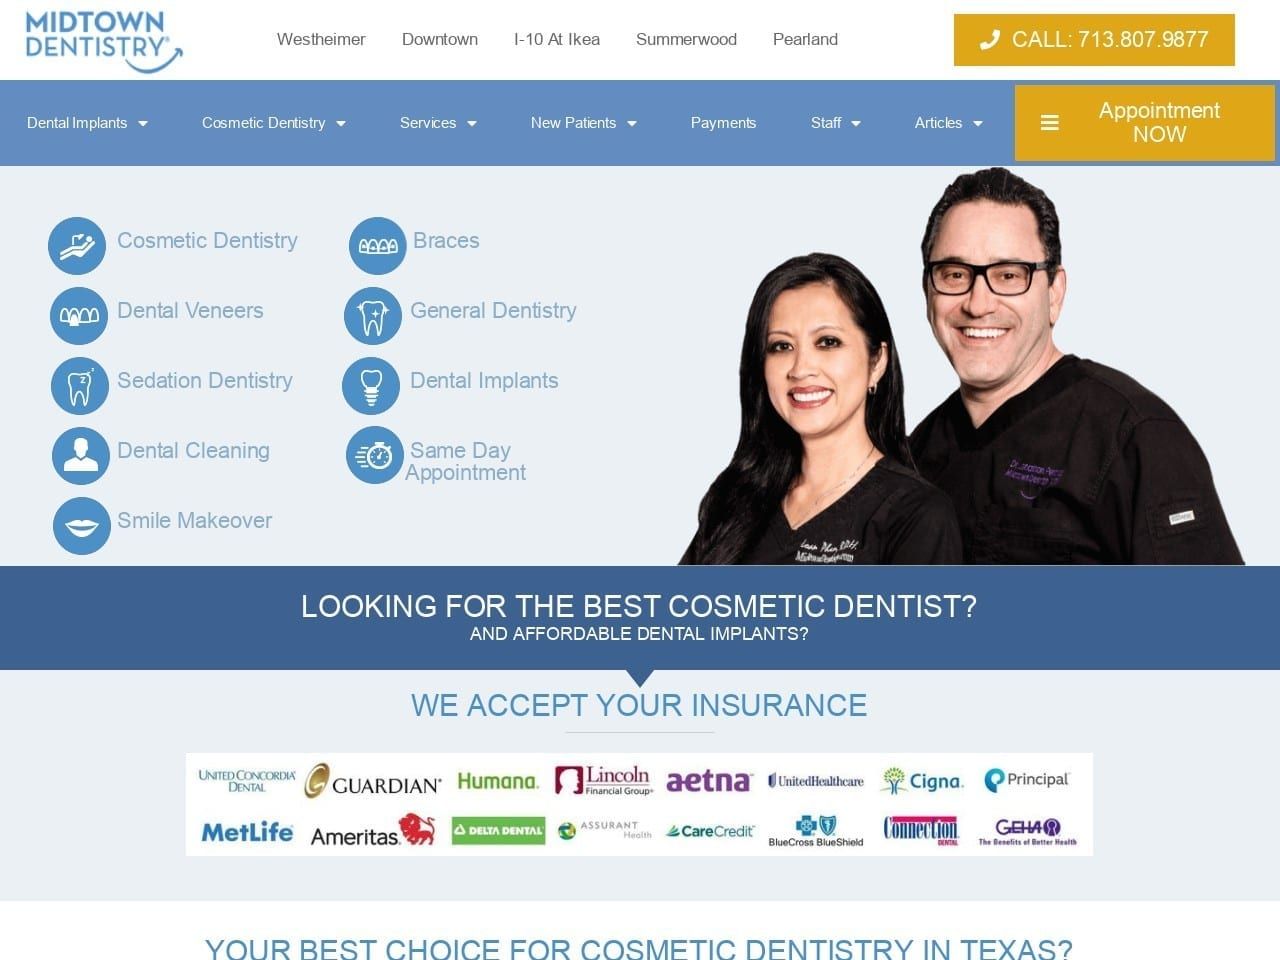 Midtown Dentistry Website Screenshot from midtowndentistry.com